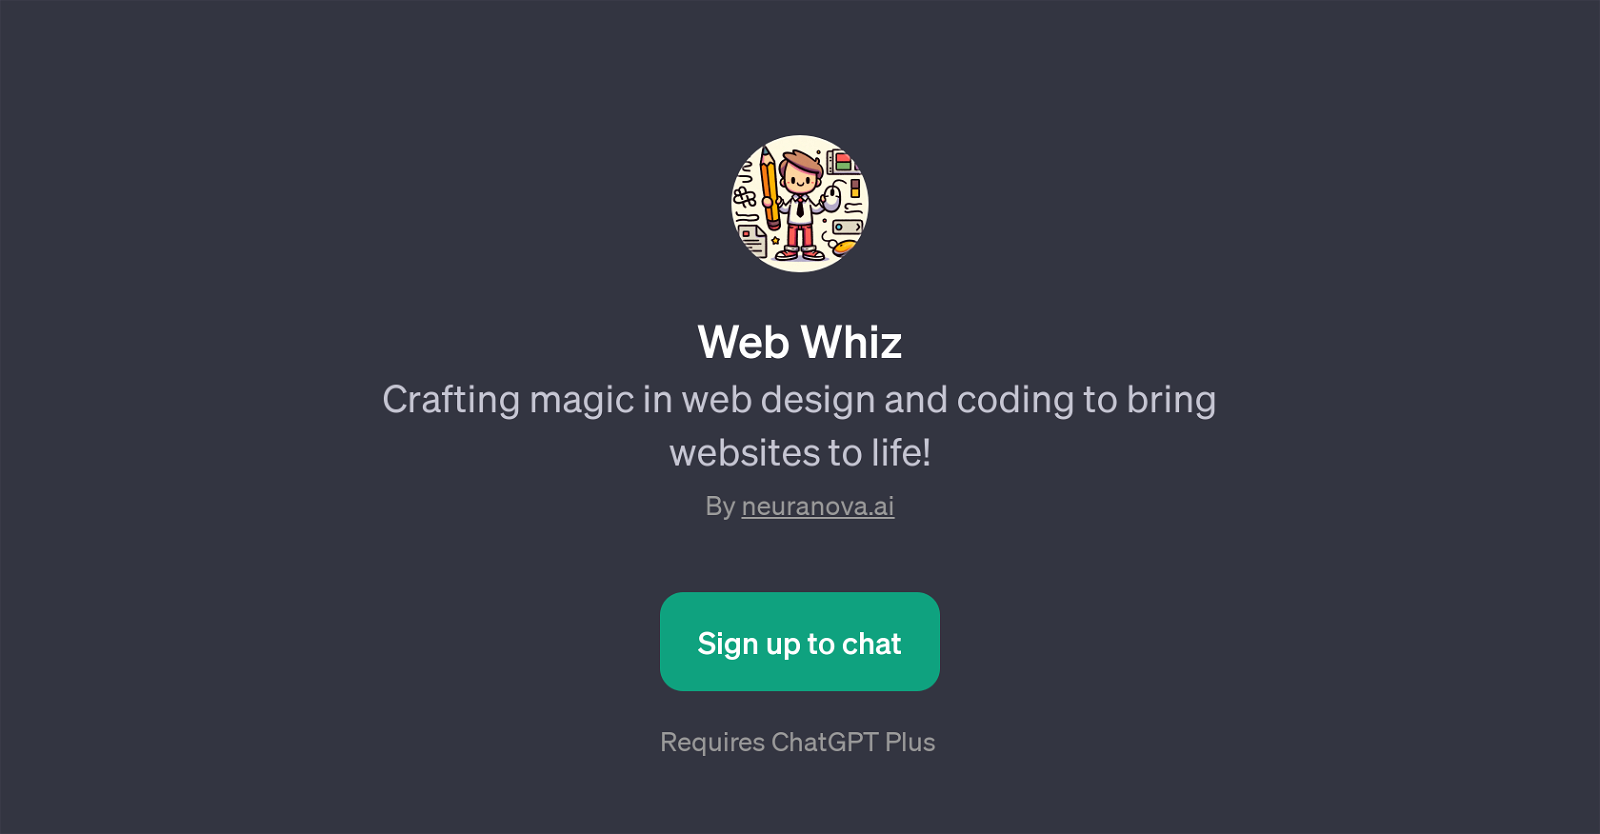 Web Whiz website